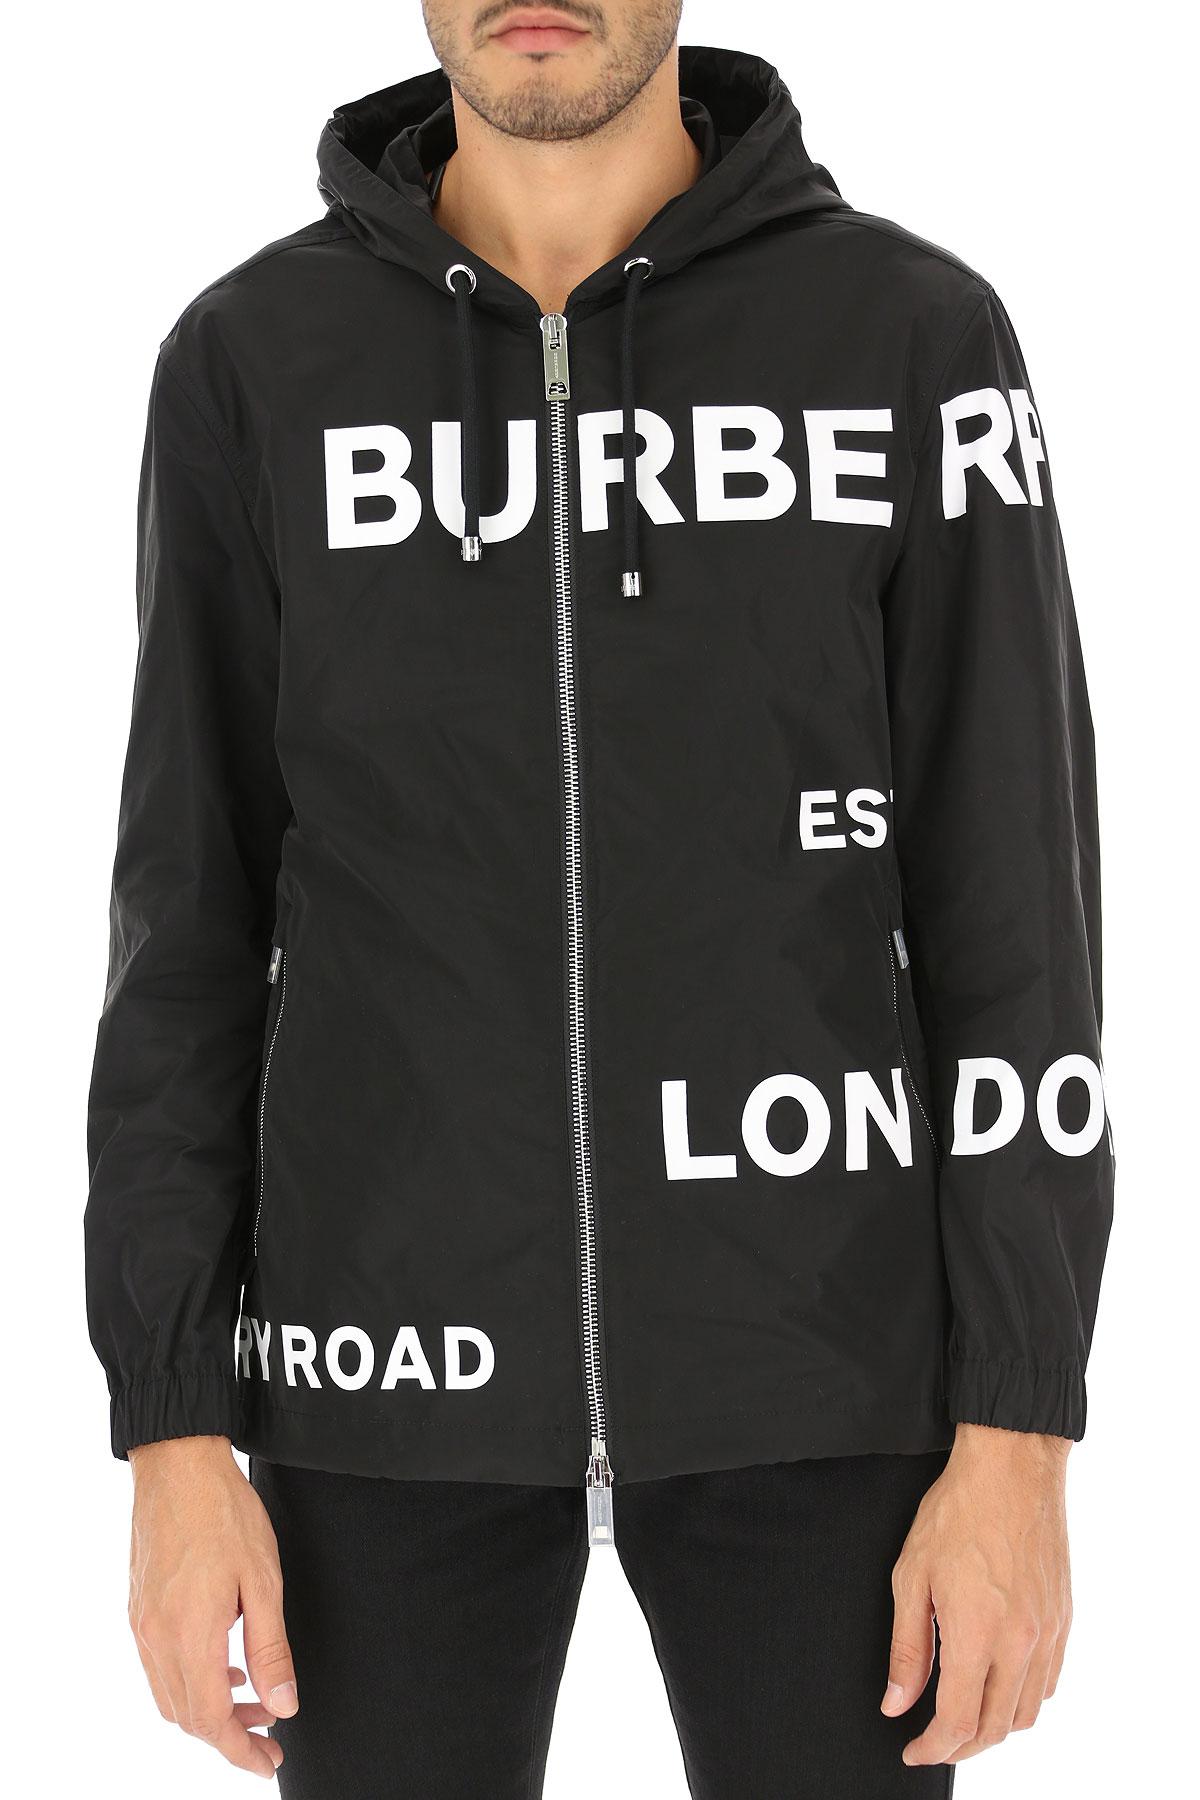 burberry jacket mens black